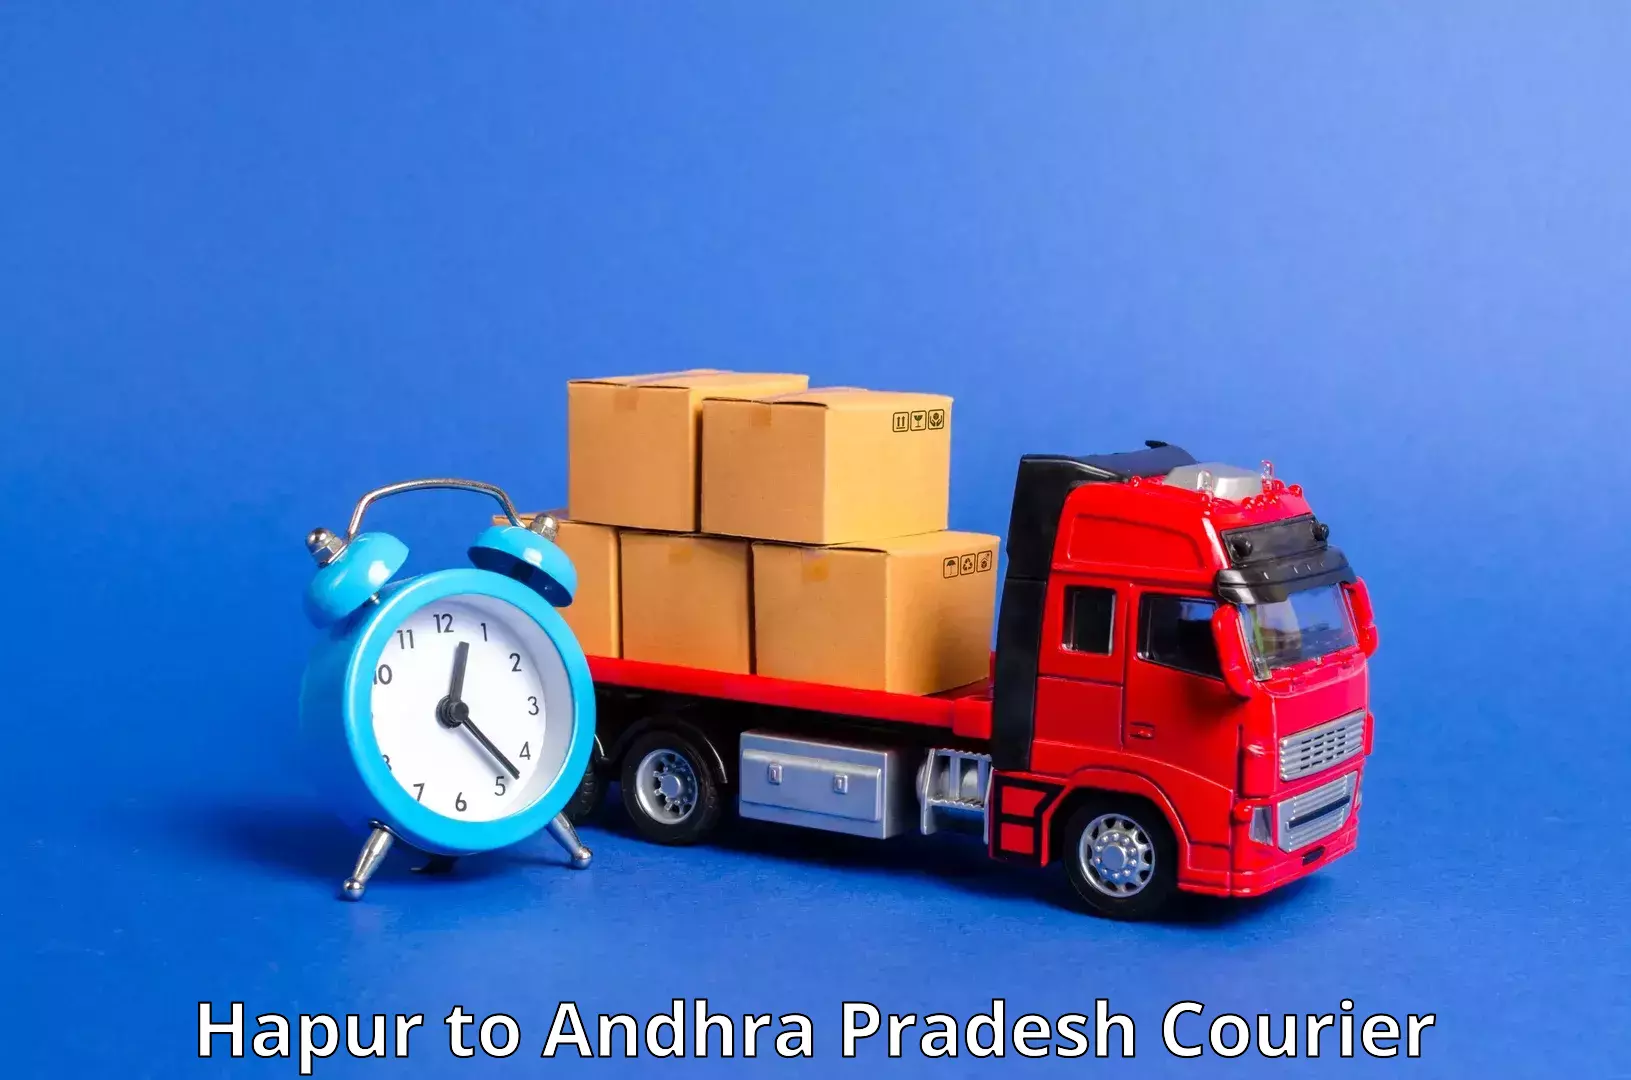 Next day courier Hapur to Tirupati